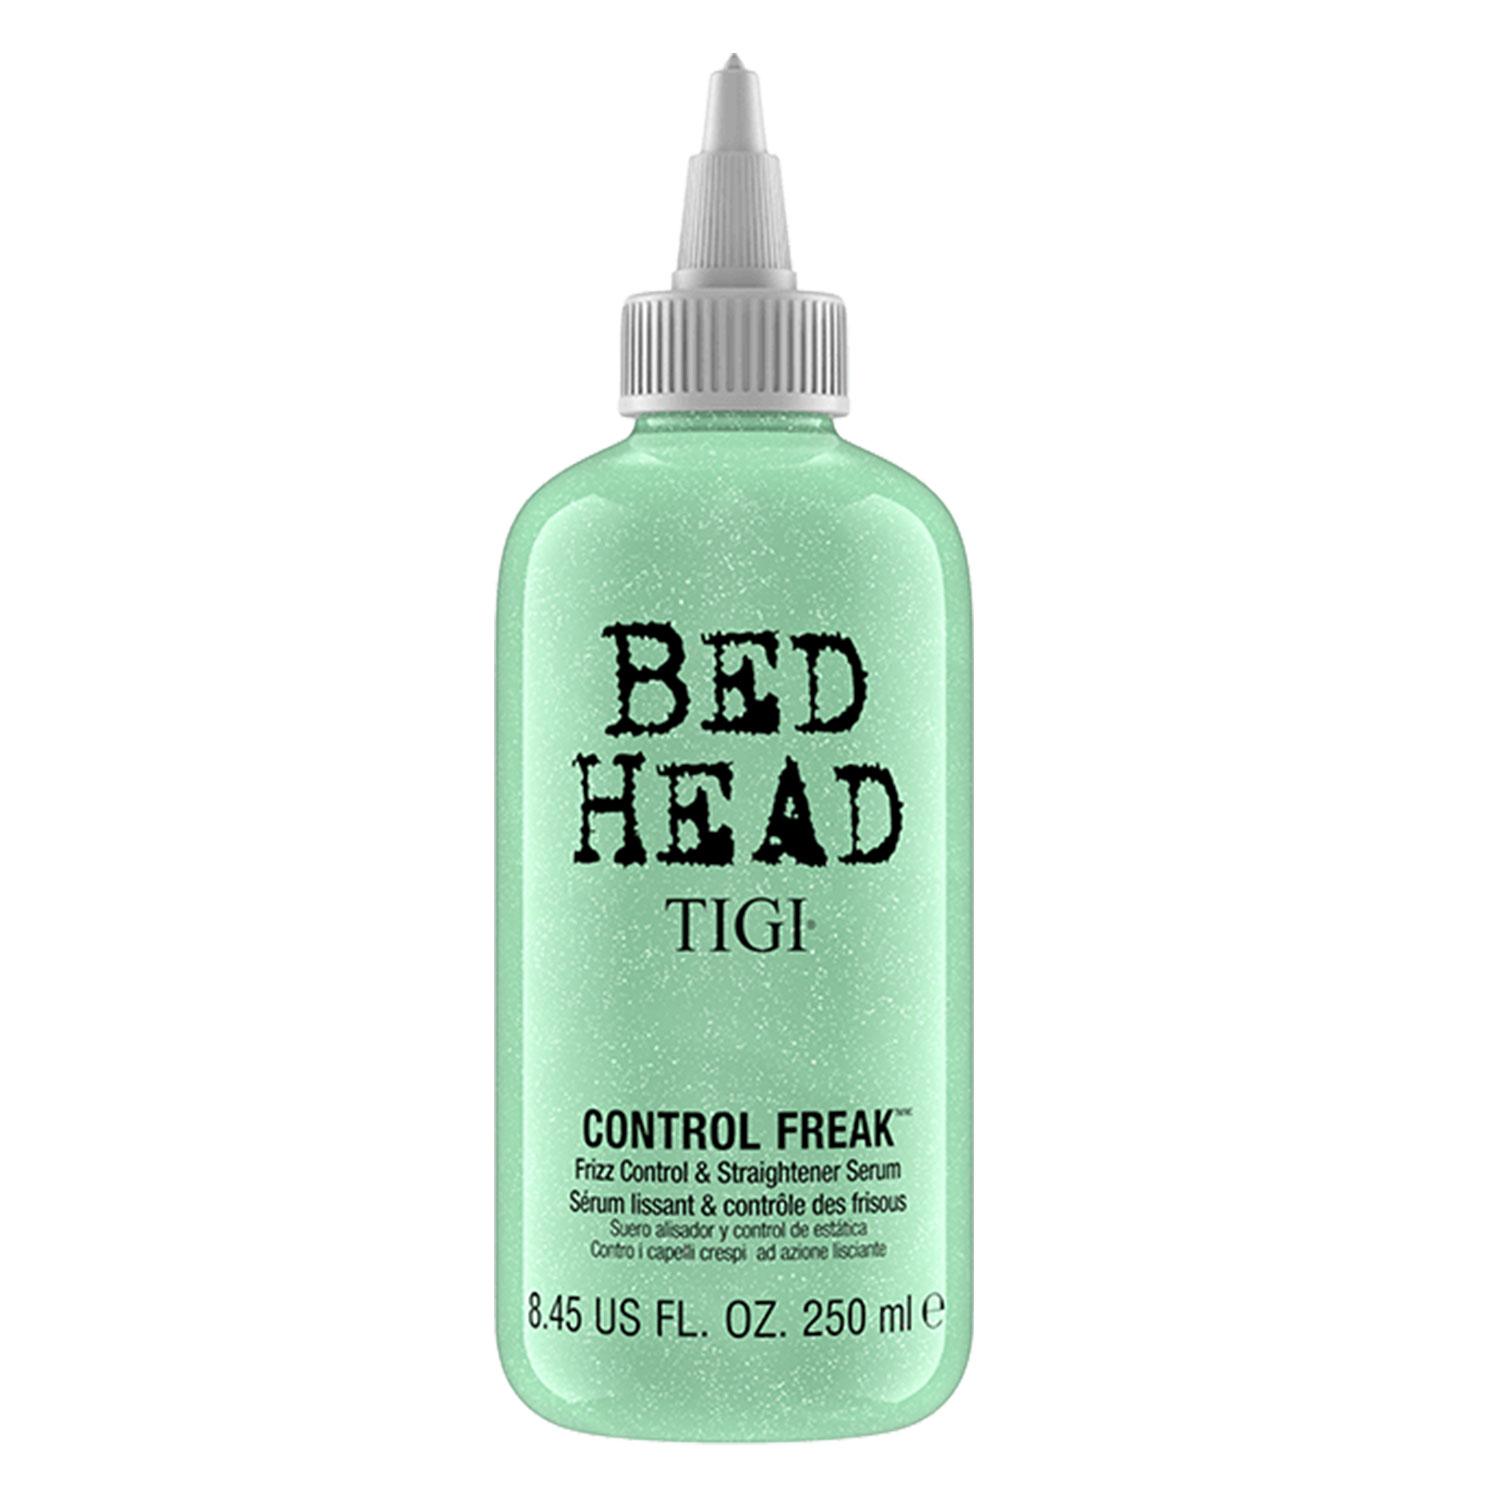 Bed Head - Control Freak Serum